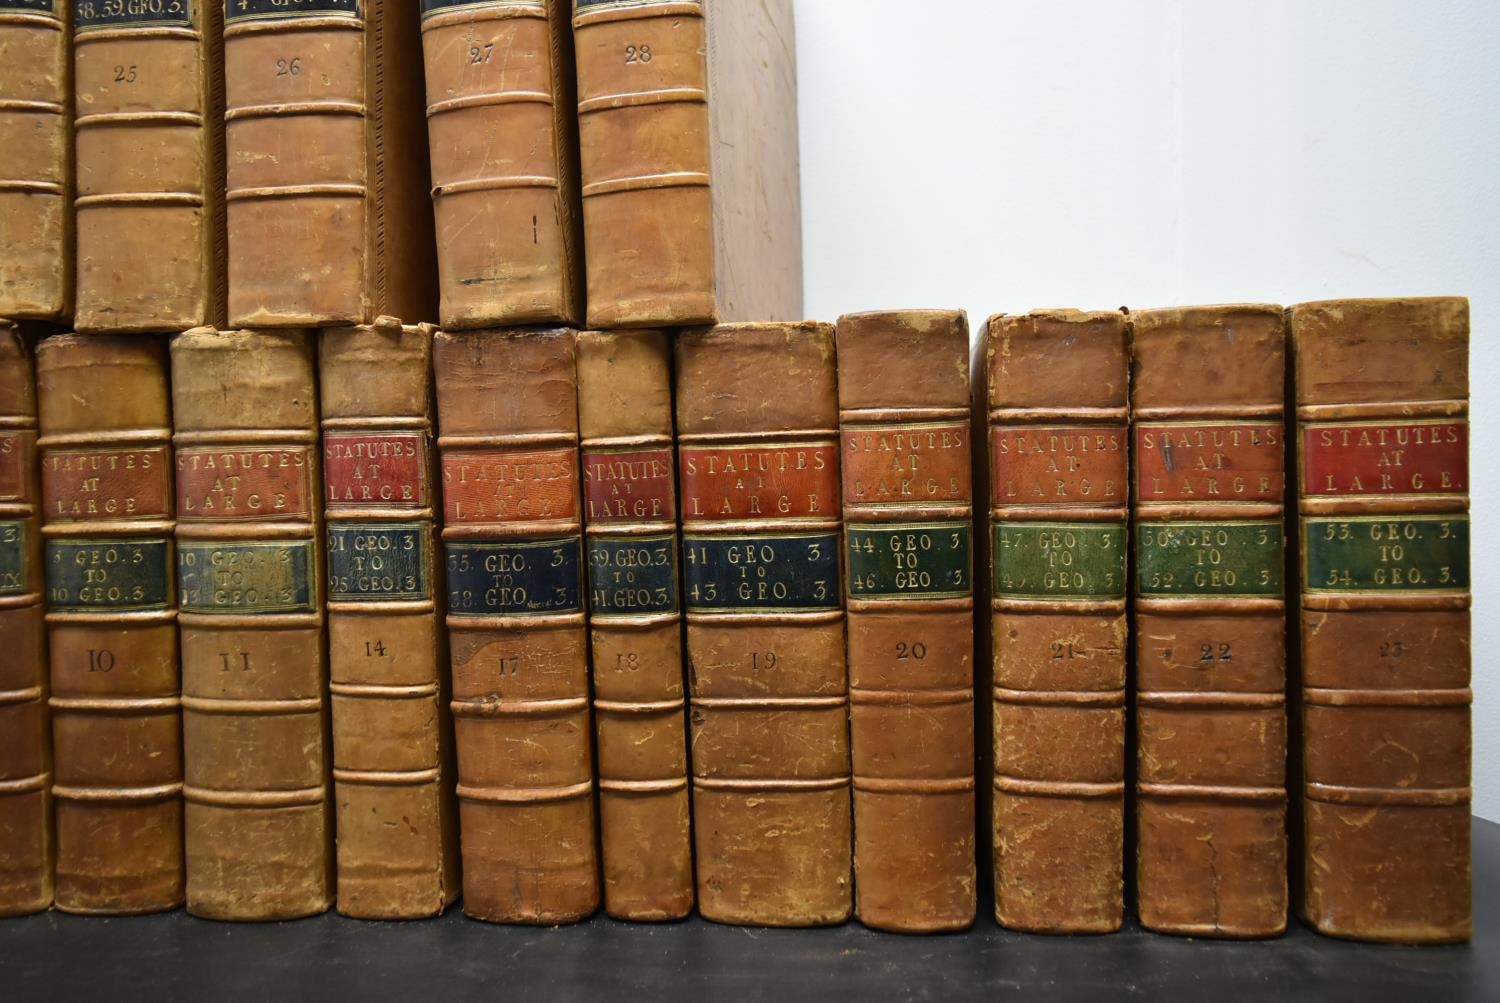 Statutes at Large, twenty four leather bound volumes relating to English law. (Missing volumes) - Image 3 of 5